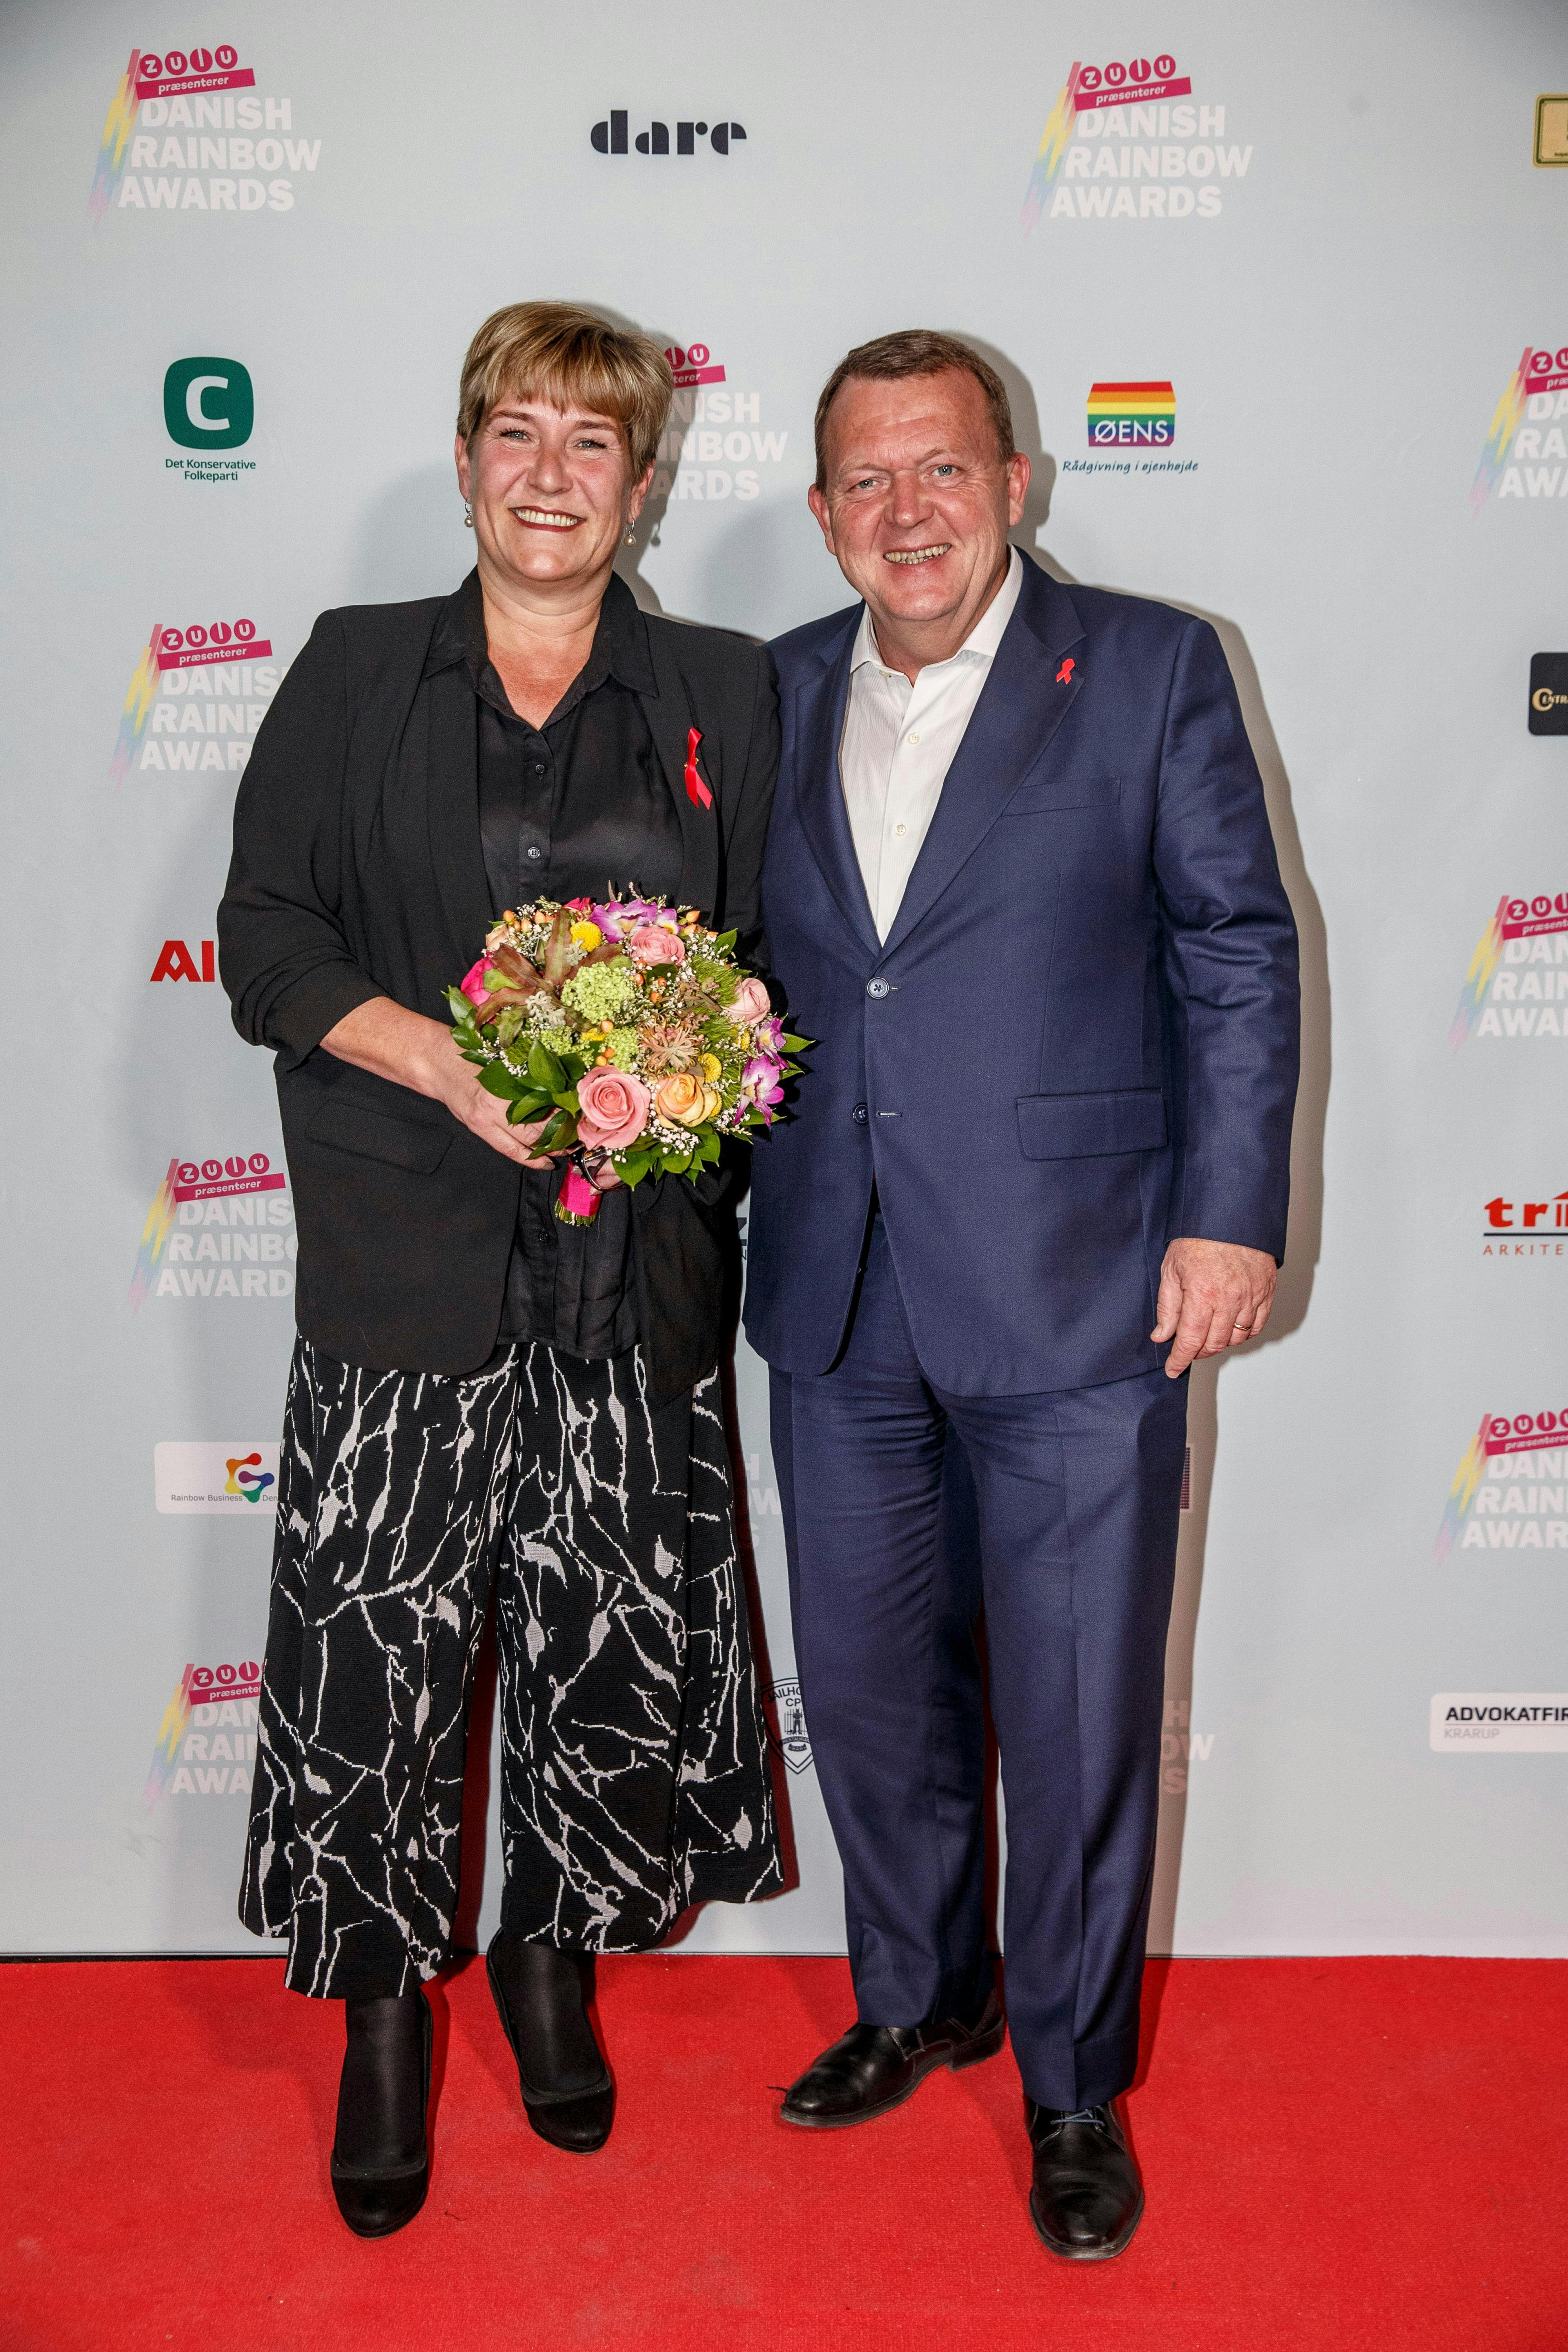 https://imgix.billedbladet.dk/20190403_dm_danish_rainbow_awards_254.jpg